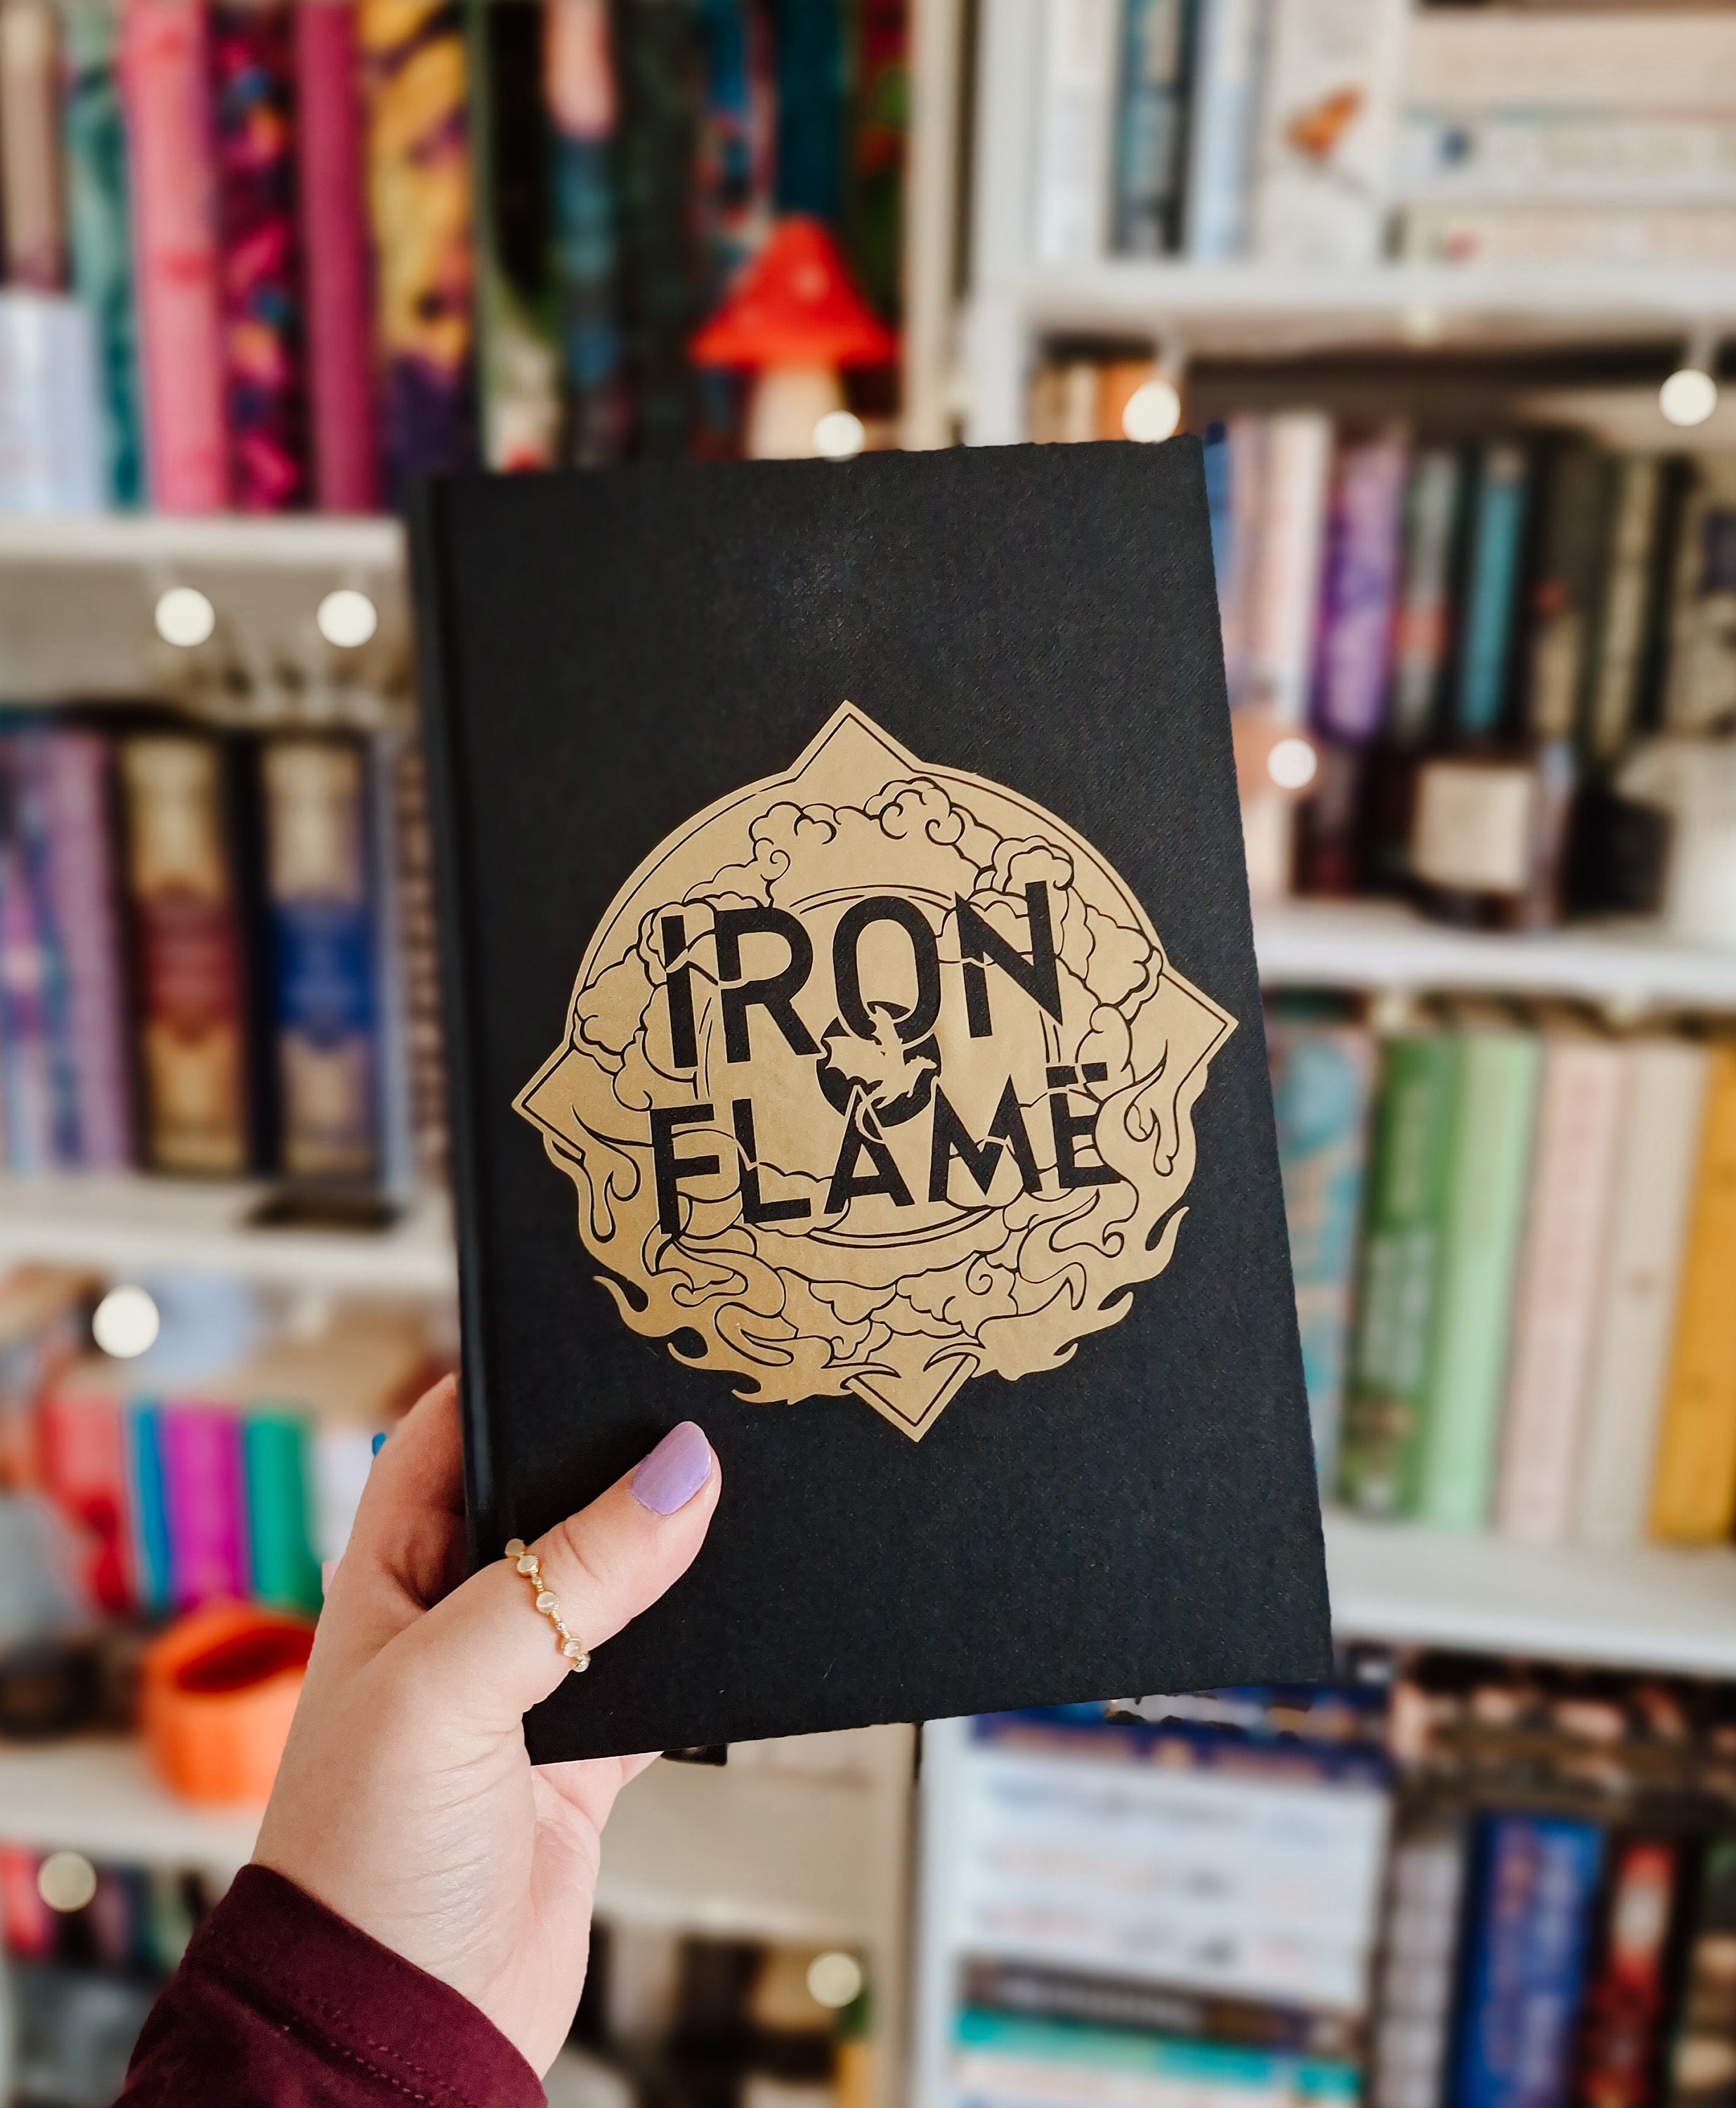 Iron Flame PRE ORDER Sprayed Edges, Rebecca Yoros Book Cover